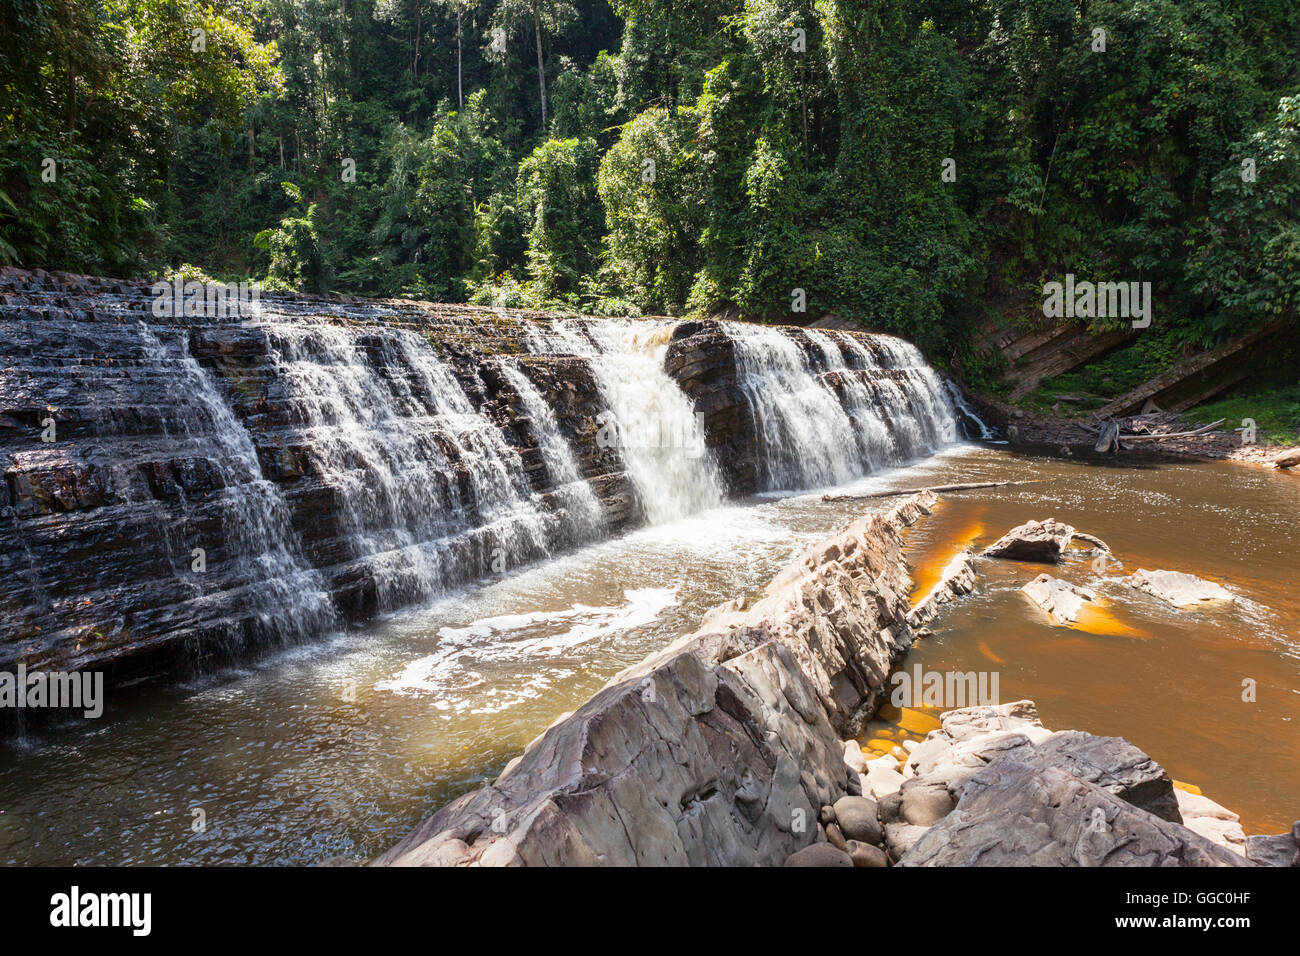 Waterfalls on the Maliau river in remote Sabah, Malaysia Borneo Stock Photo